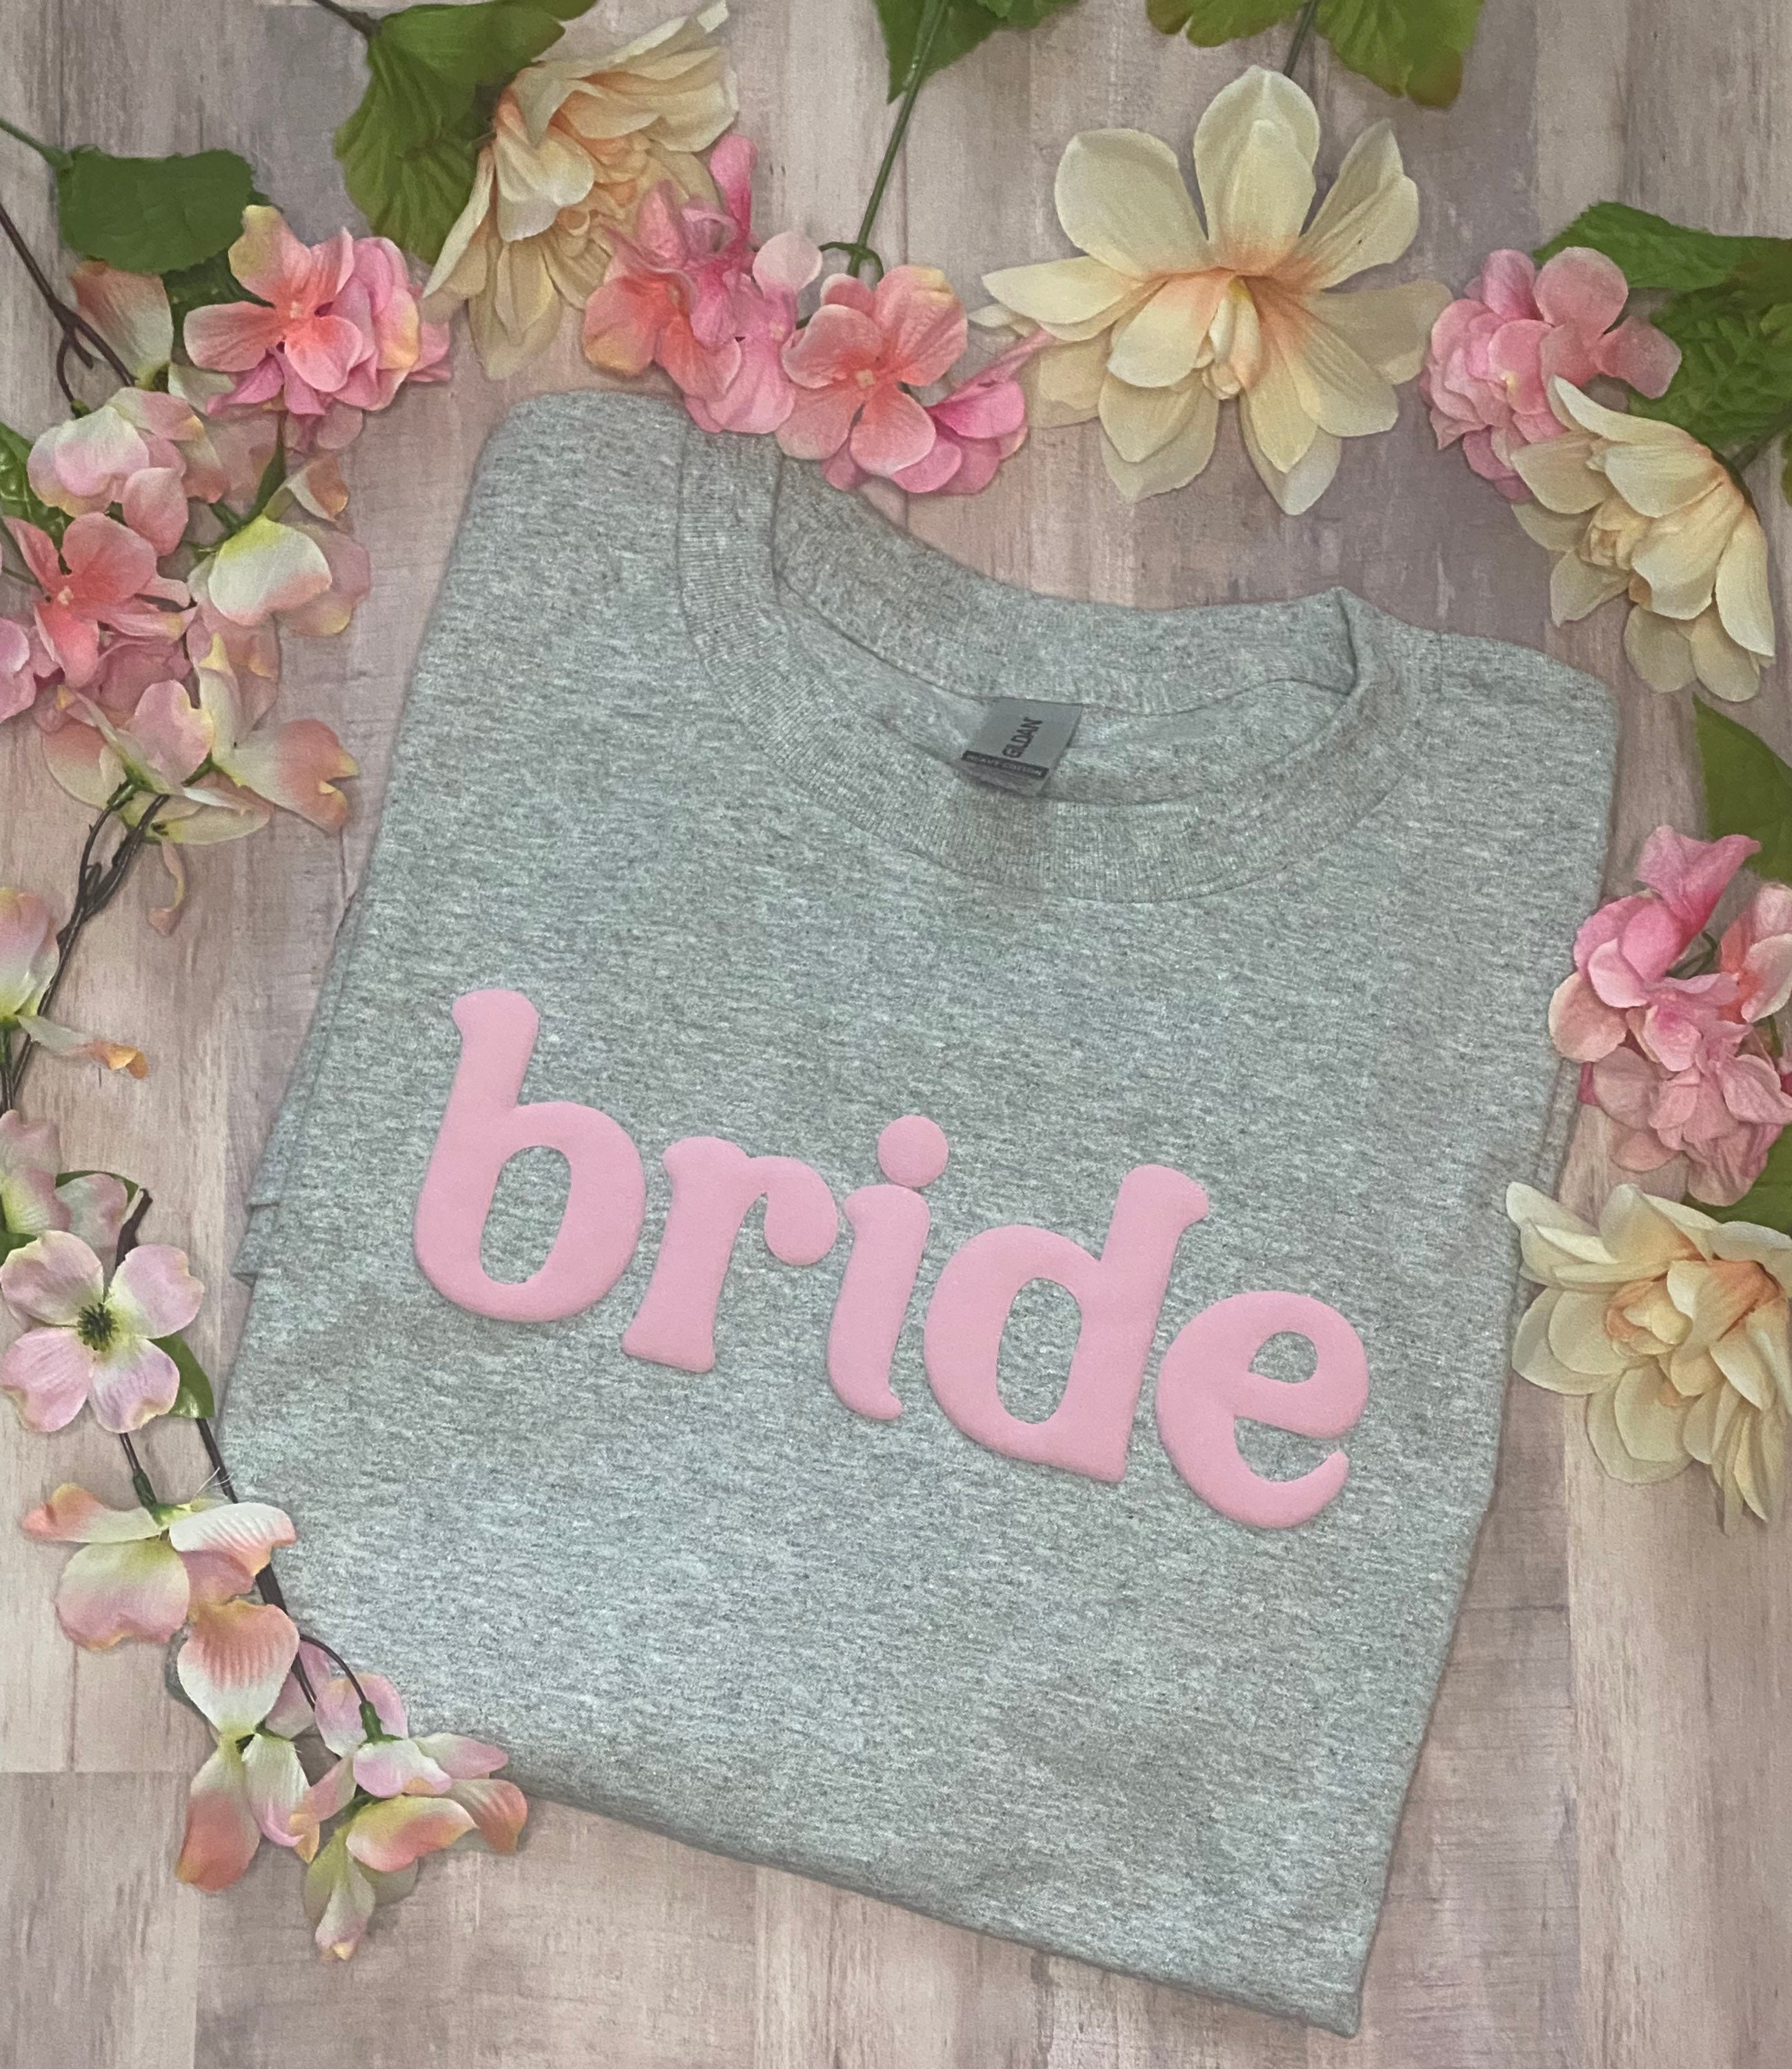 Custom BRIDE T-Shirt with Embossed Puffy Print Design